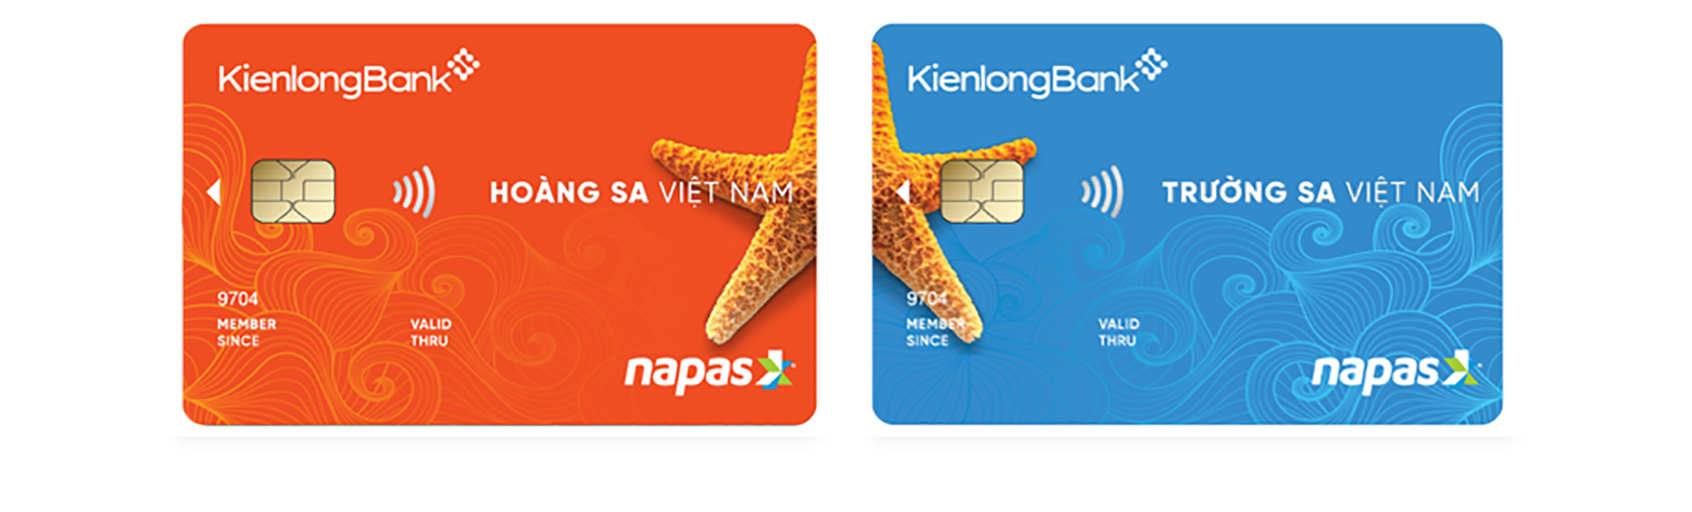 Thẻ KienlongBank